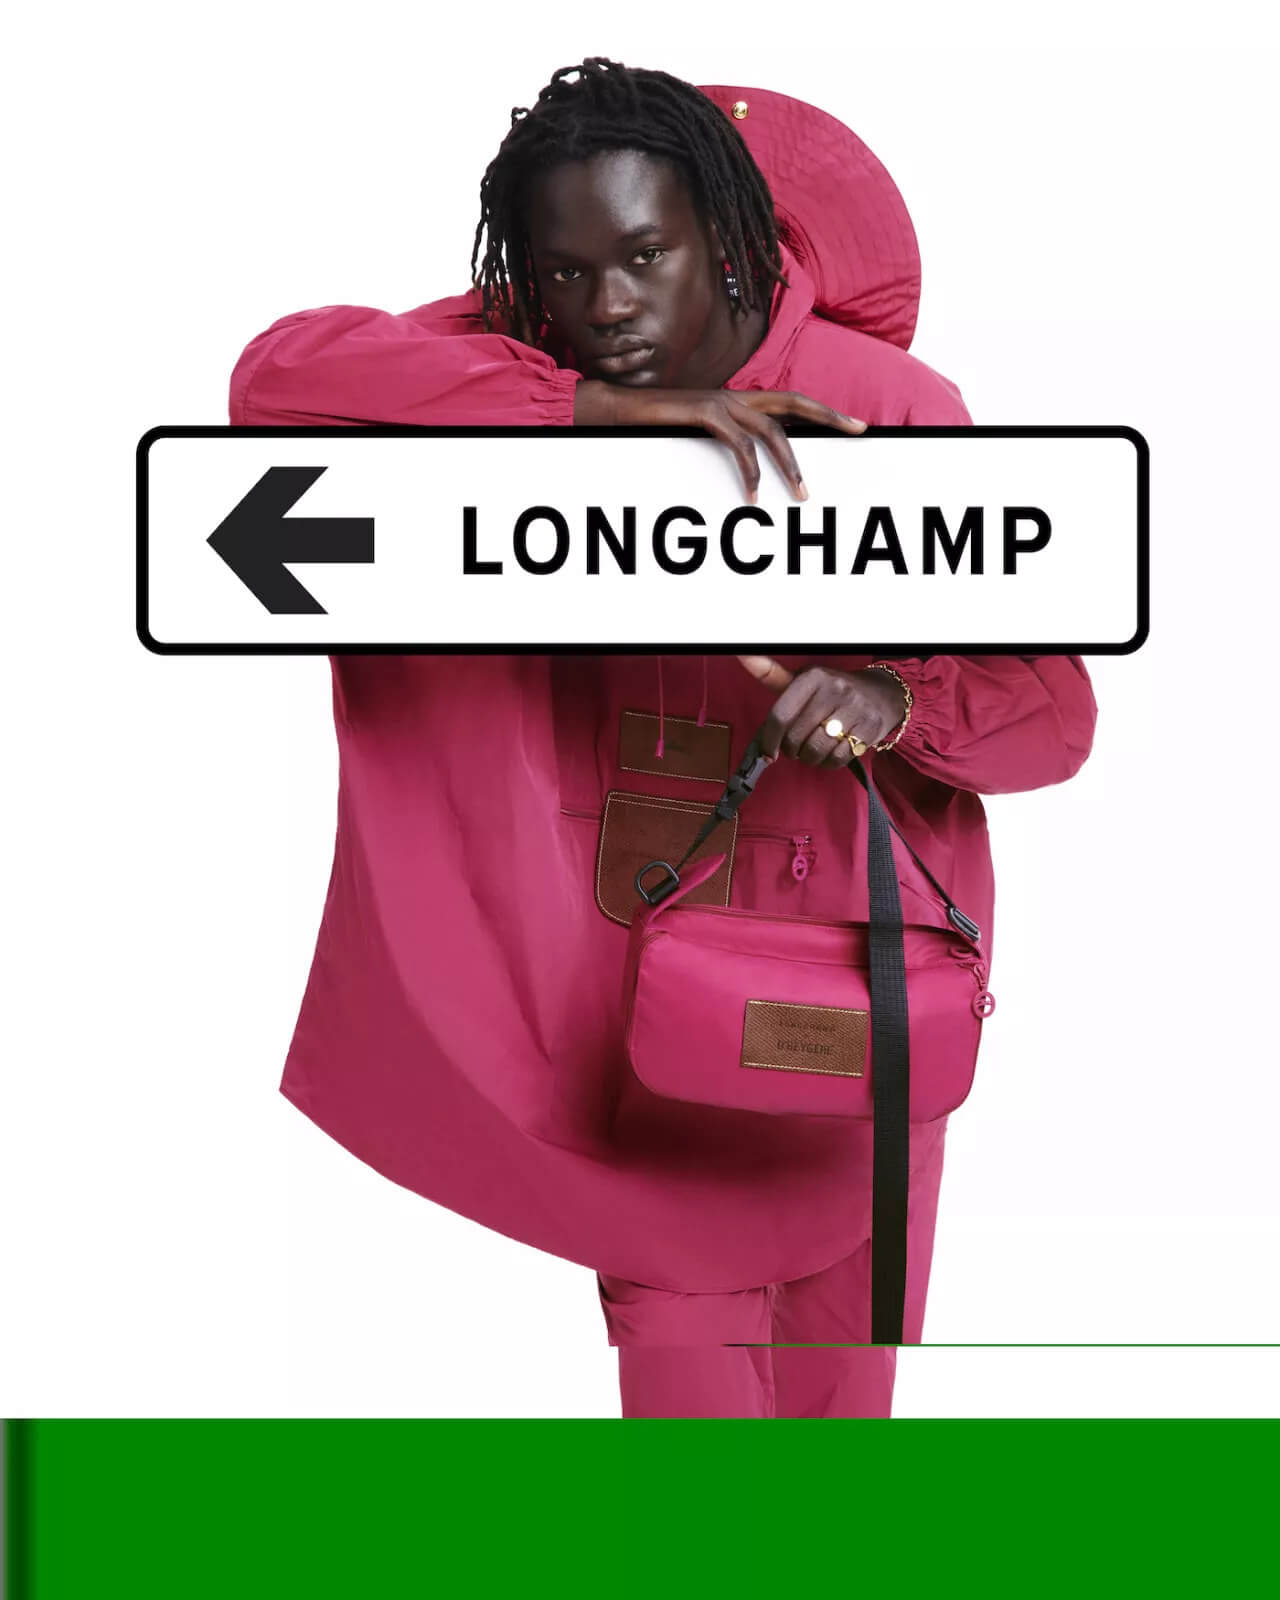 Longchamp x D'heygere